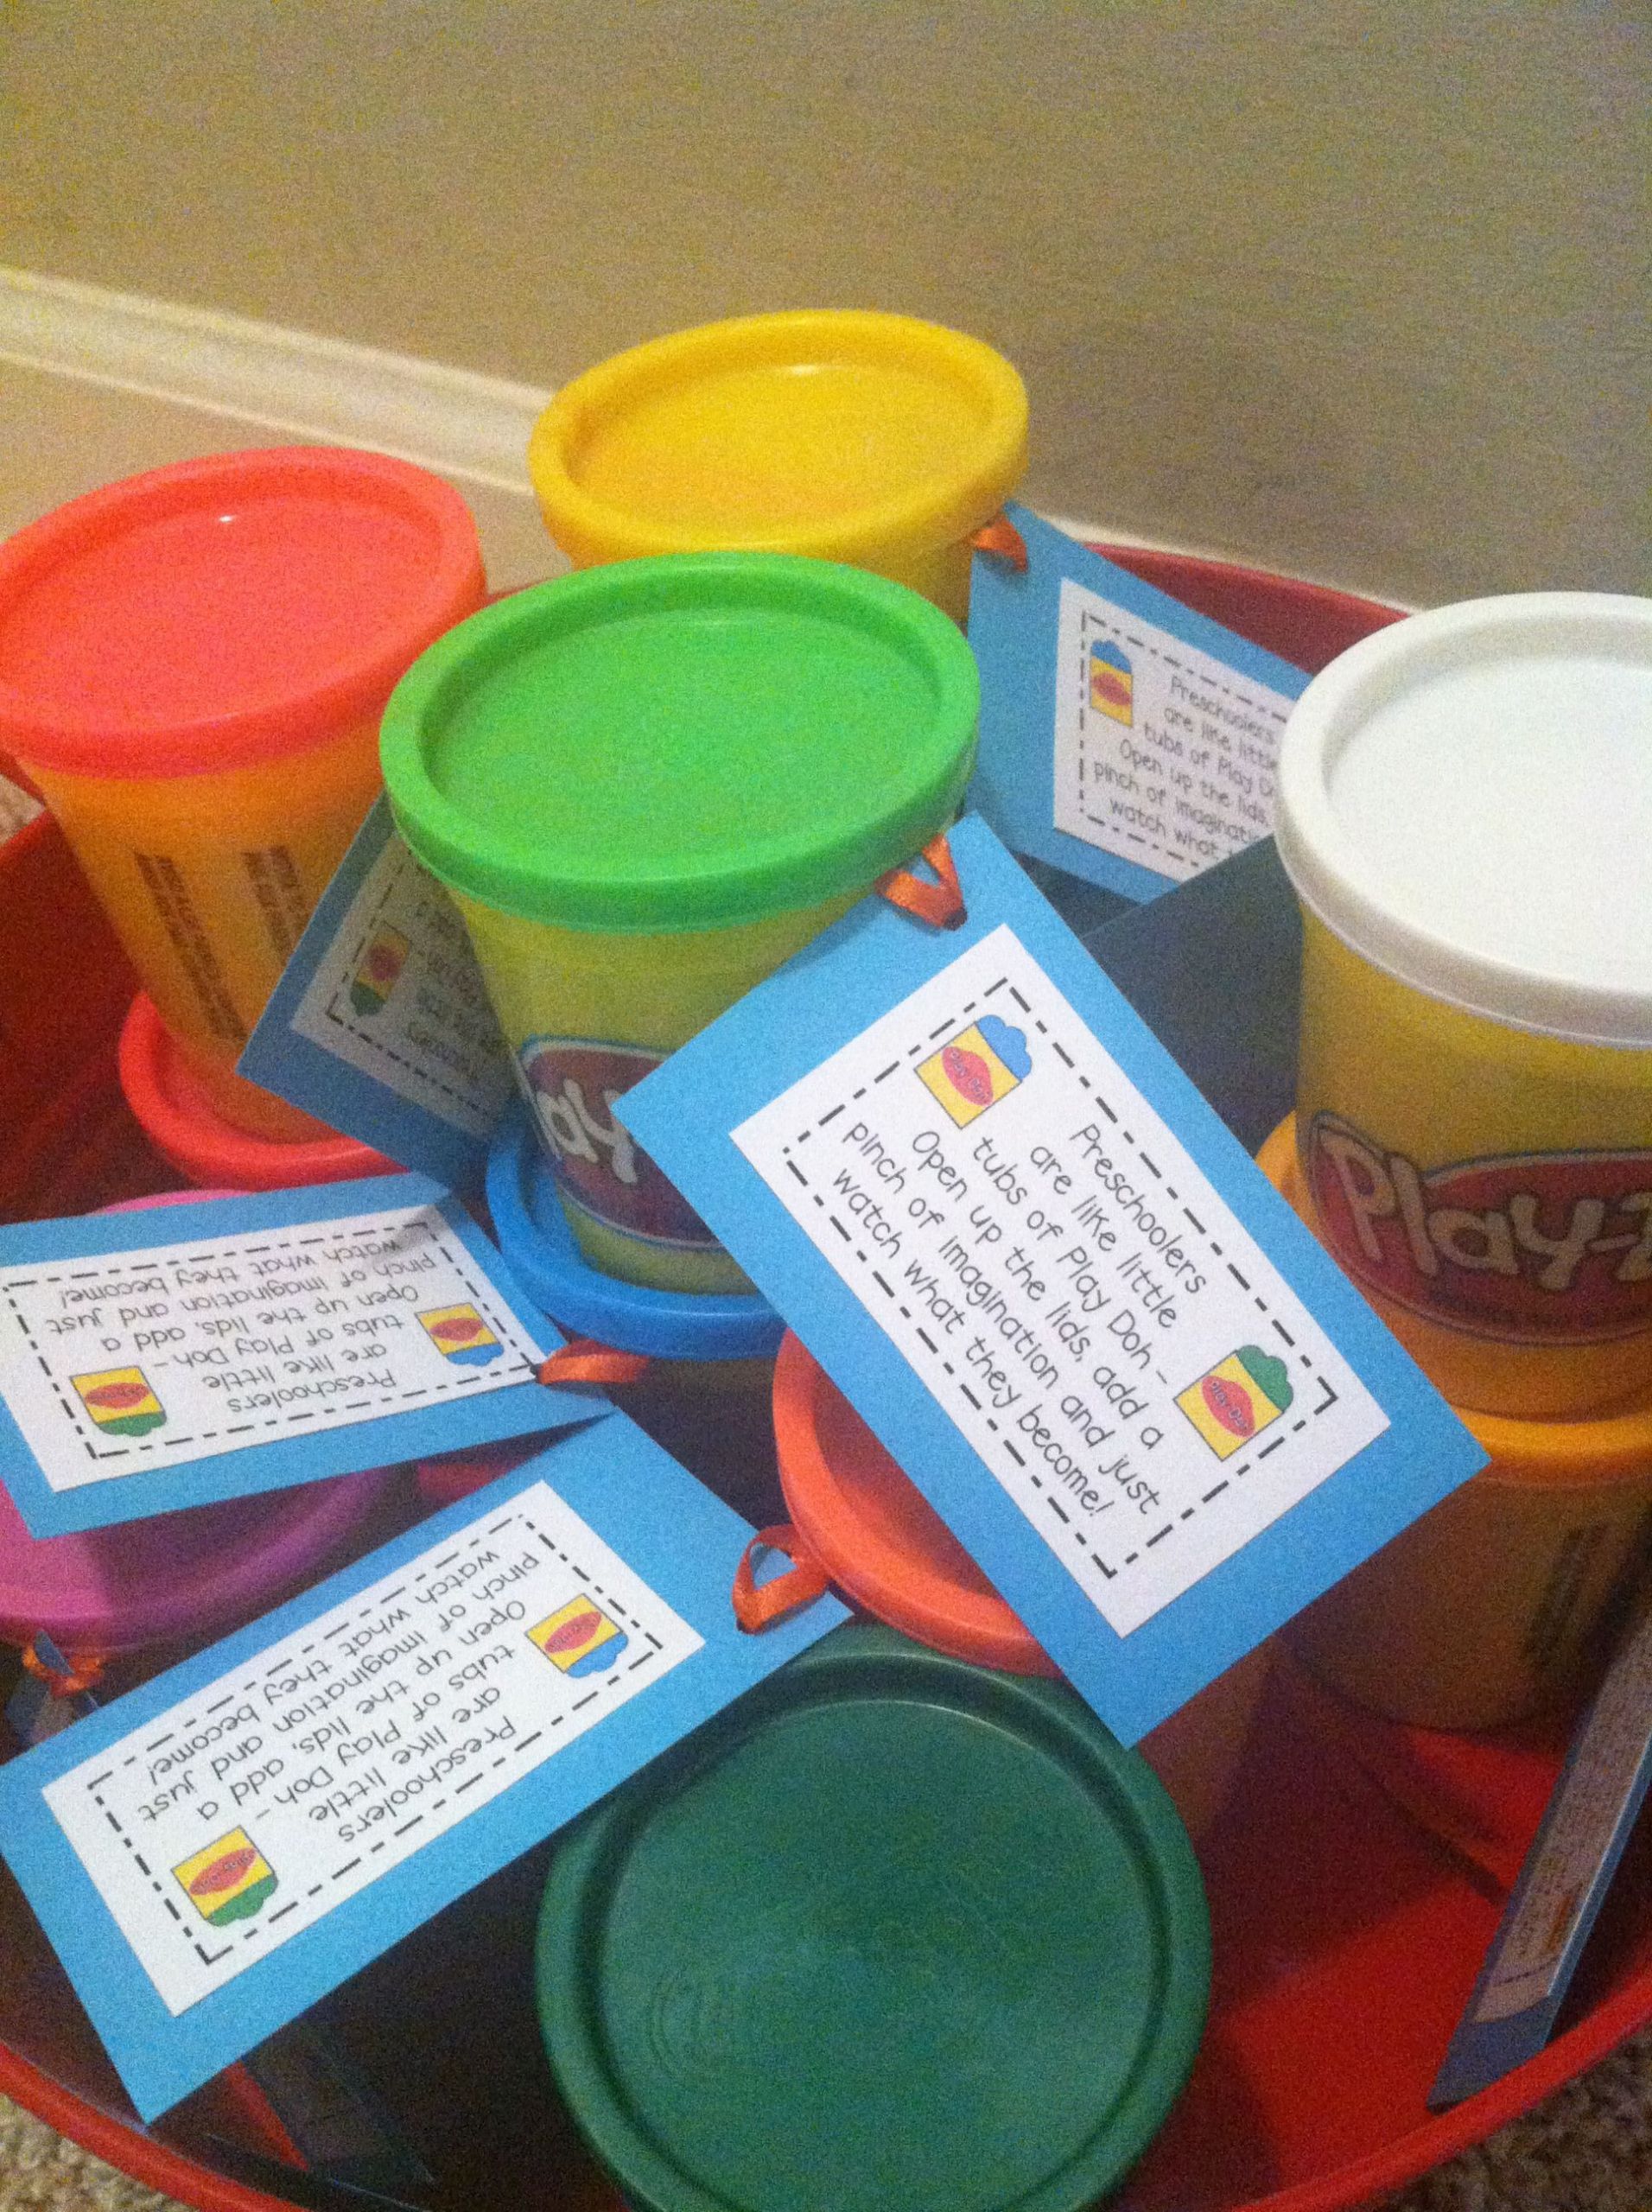 Preschool Graduation Gift Ideas From Grandparents
 Open House Gift Idea Cute back to school preschool t